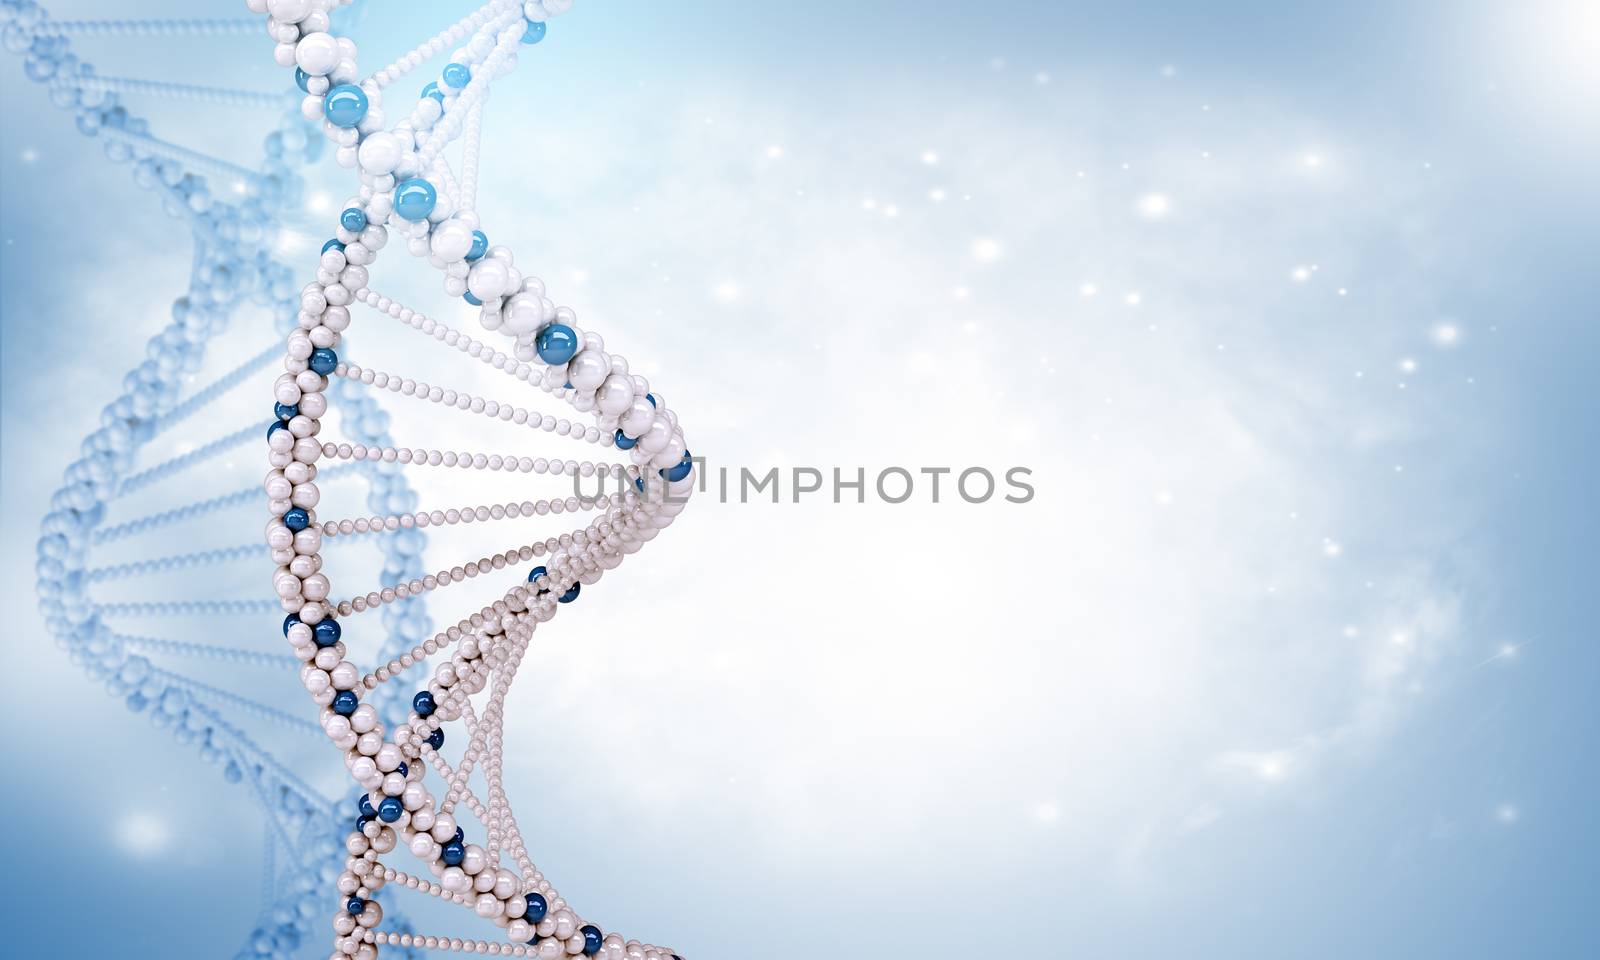 DNA molecule on blue background, science concept